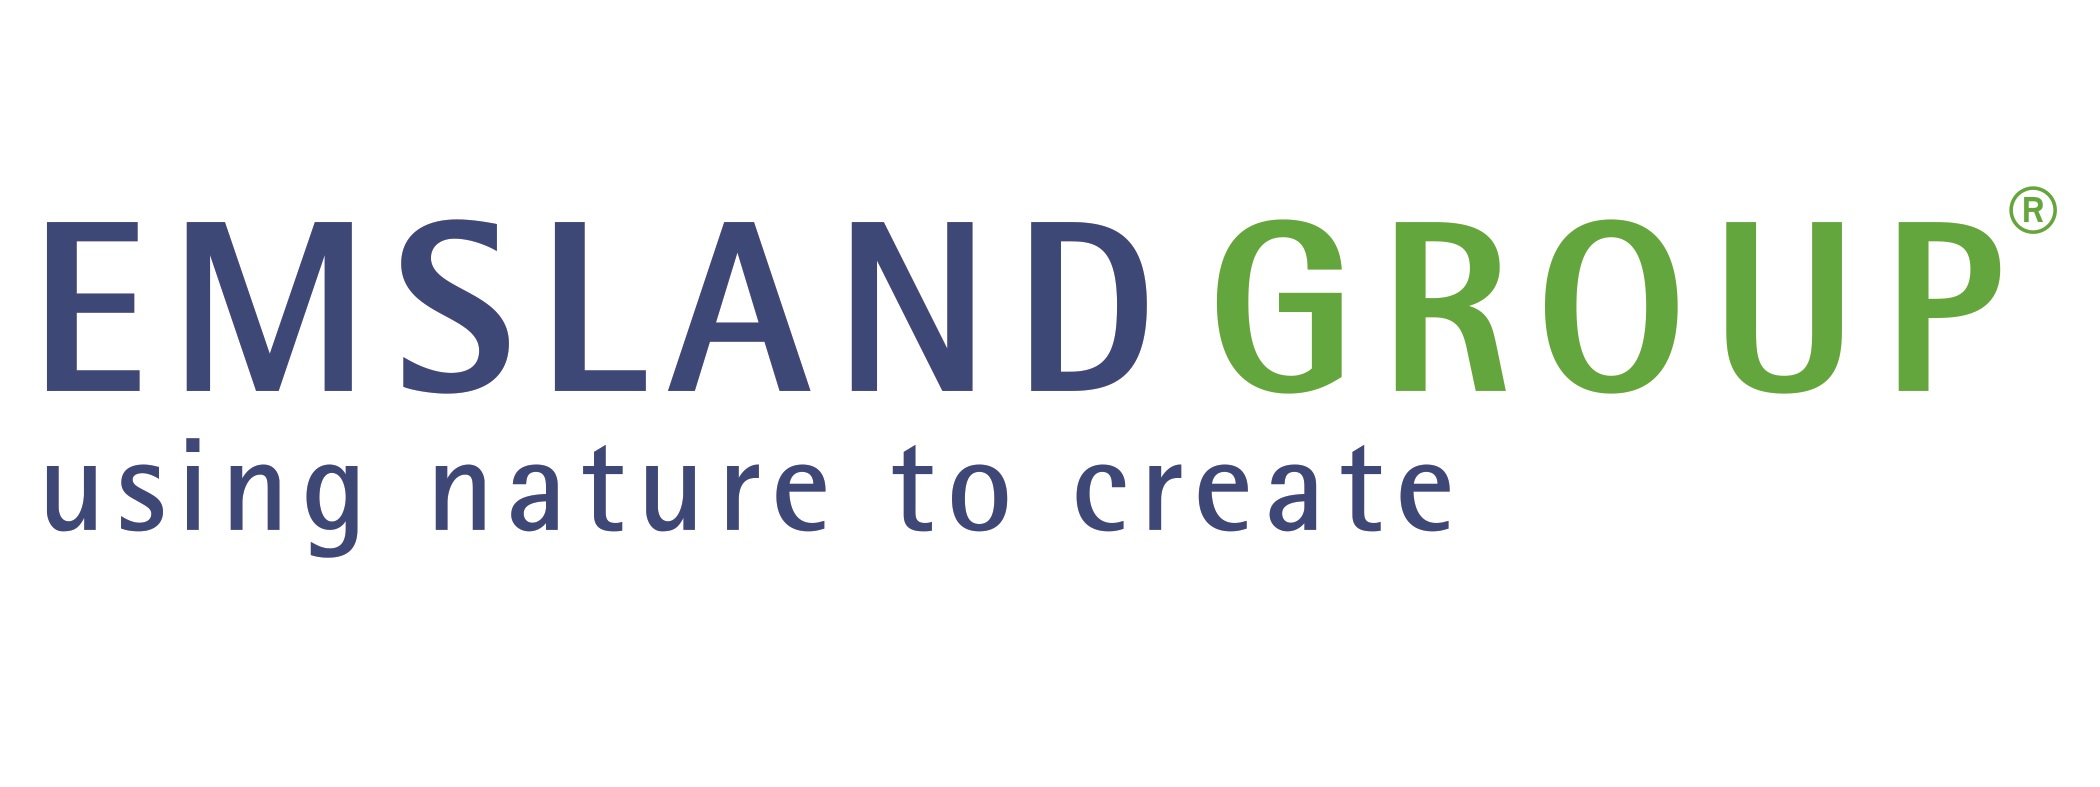 Emslandgroup Logo